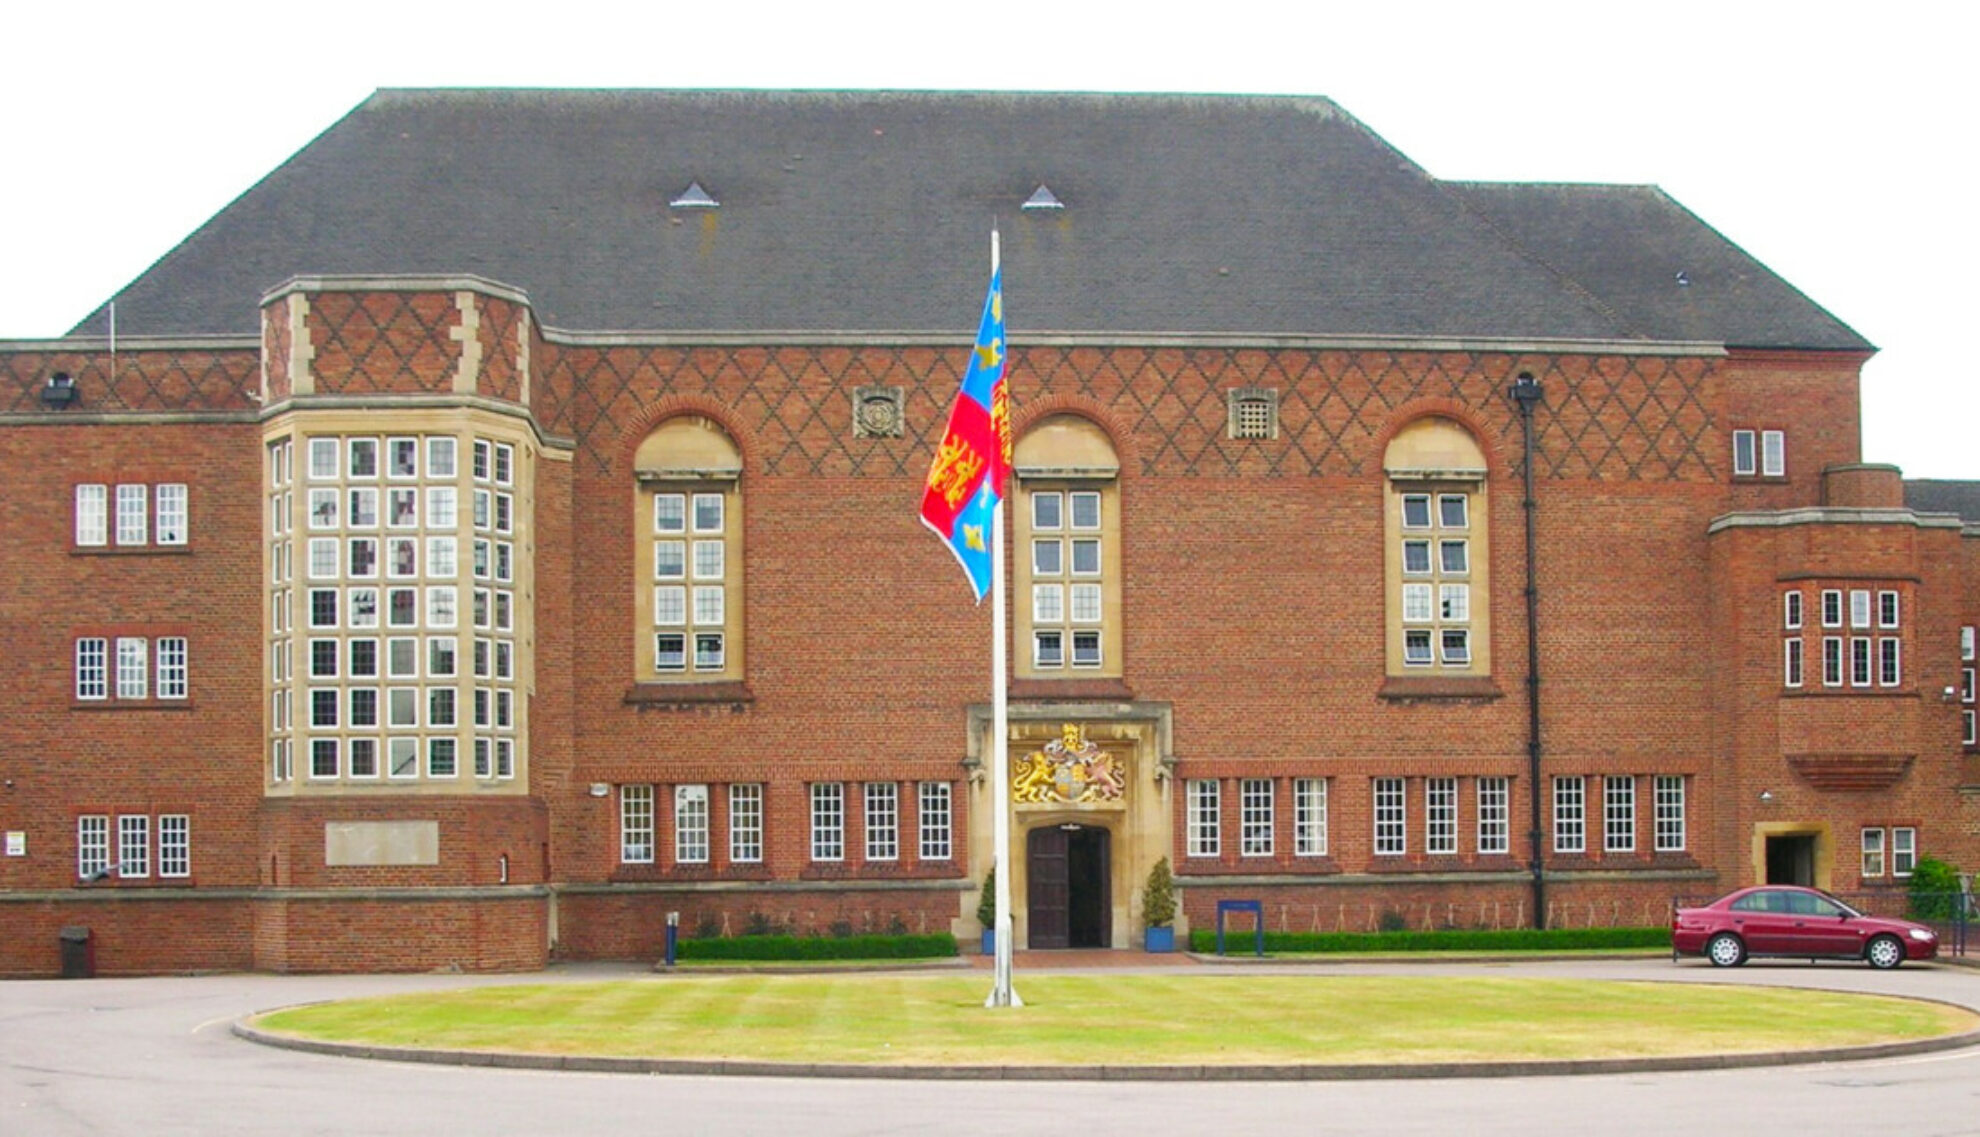 King Edward School – one of the top 10 schools in Birmingham